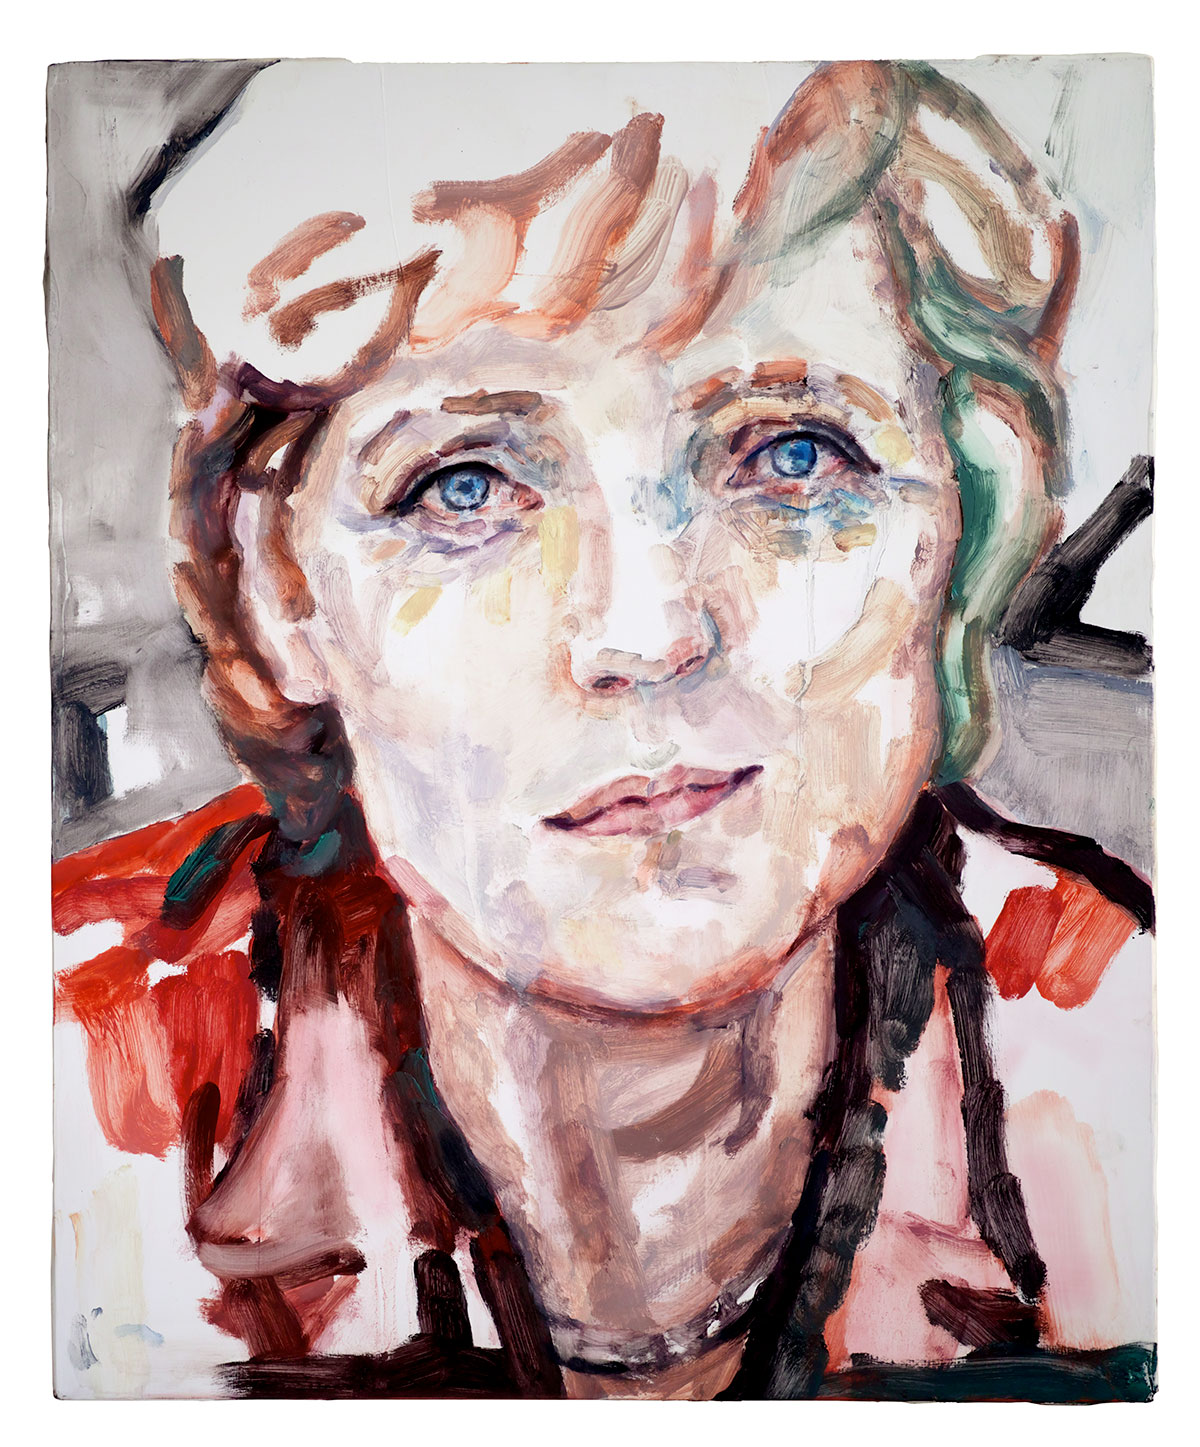 Have you seen Elizabeth Peyton’s portrait of Angela Merkel?